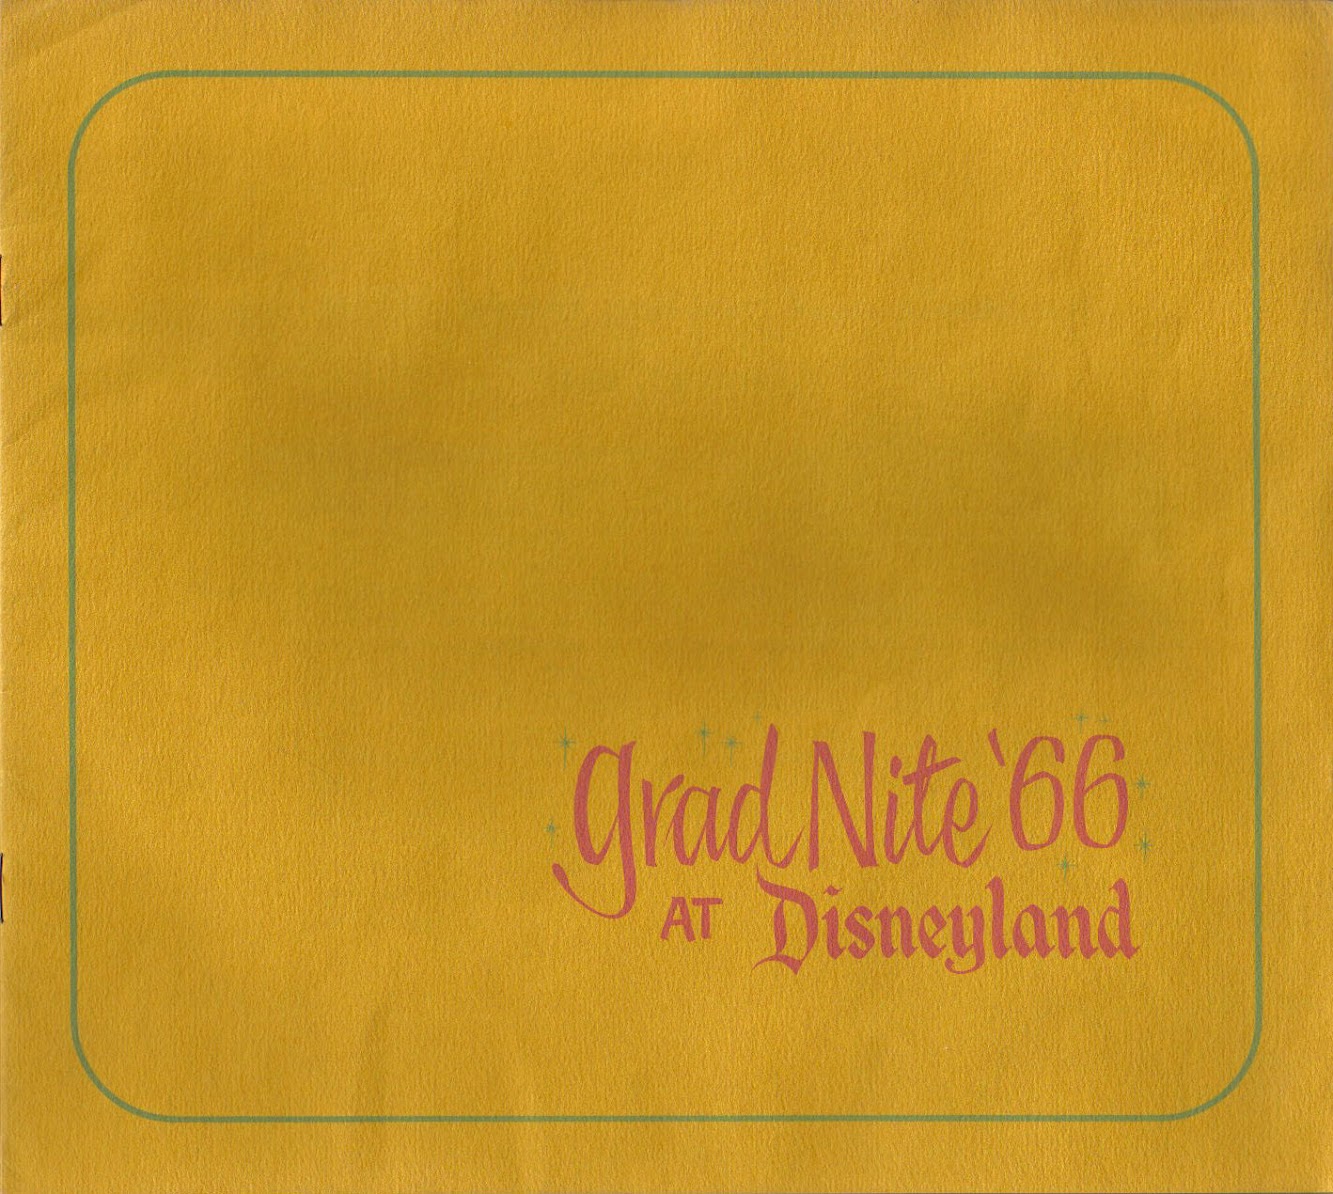 Disneyland Grad Nite 1966